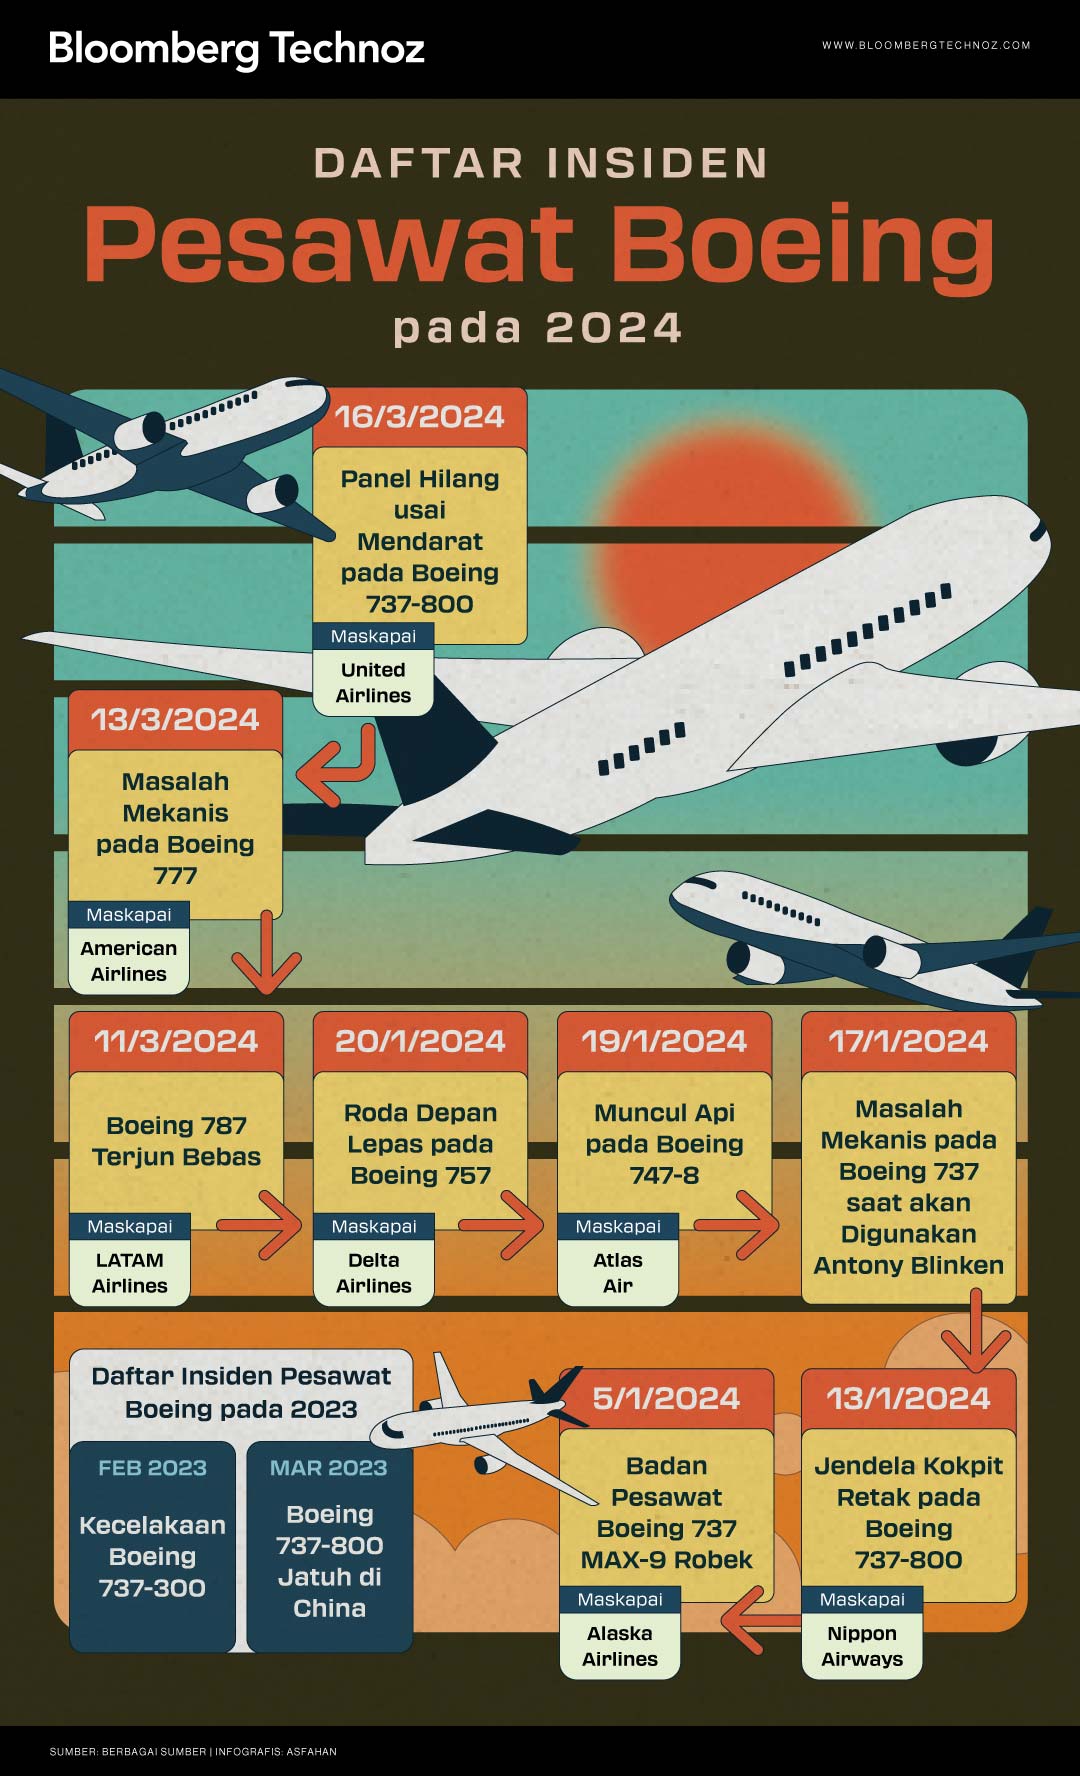 Infografis Daftar Insiden Pesawat Boeing pada 2024 (Bloomberg Technoz/Asfahan)